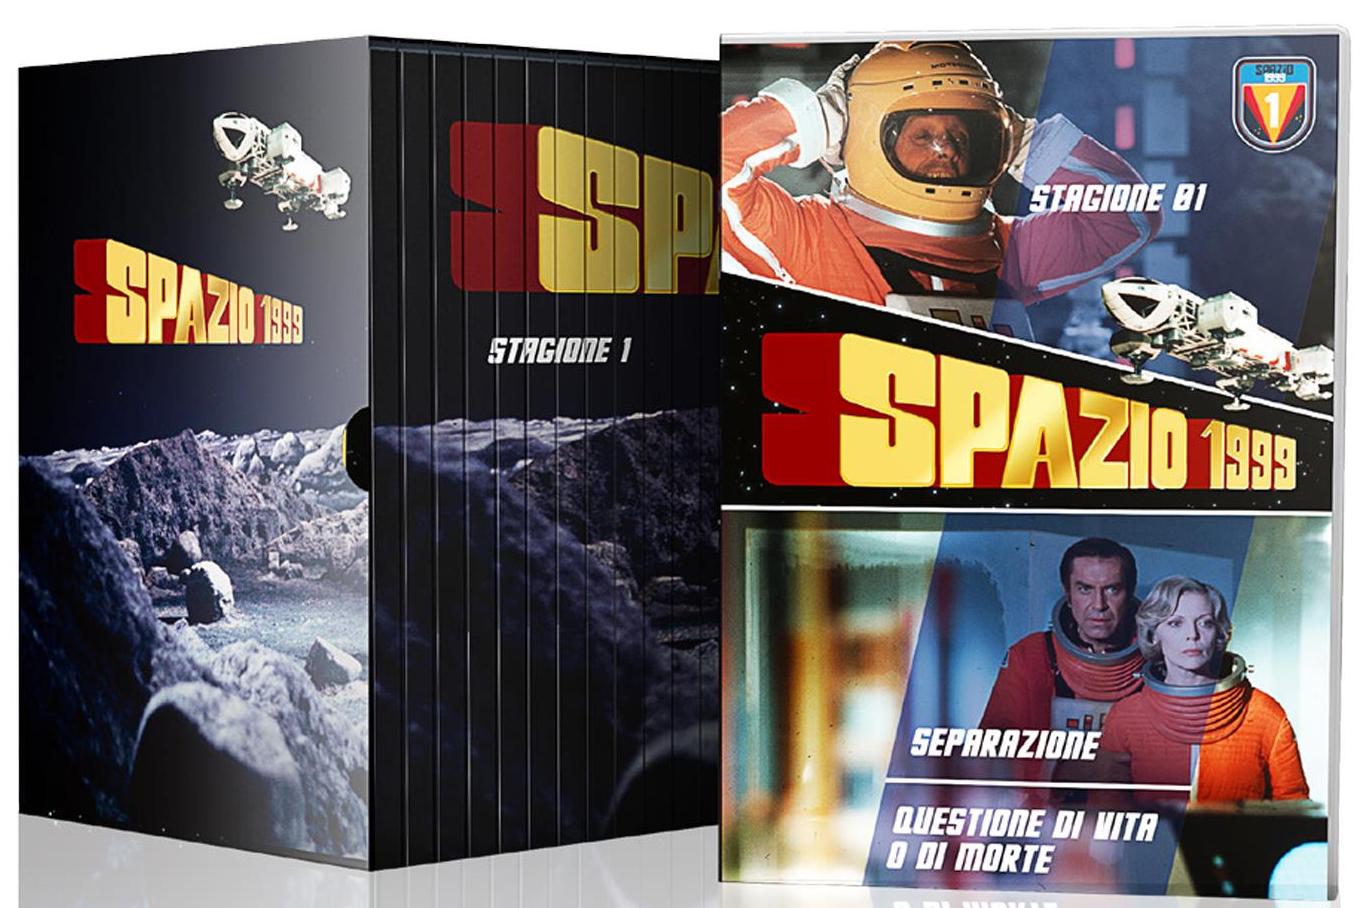 Space 1999 Merchandise Guide: Italian DVD